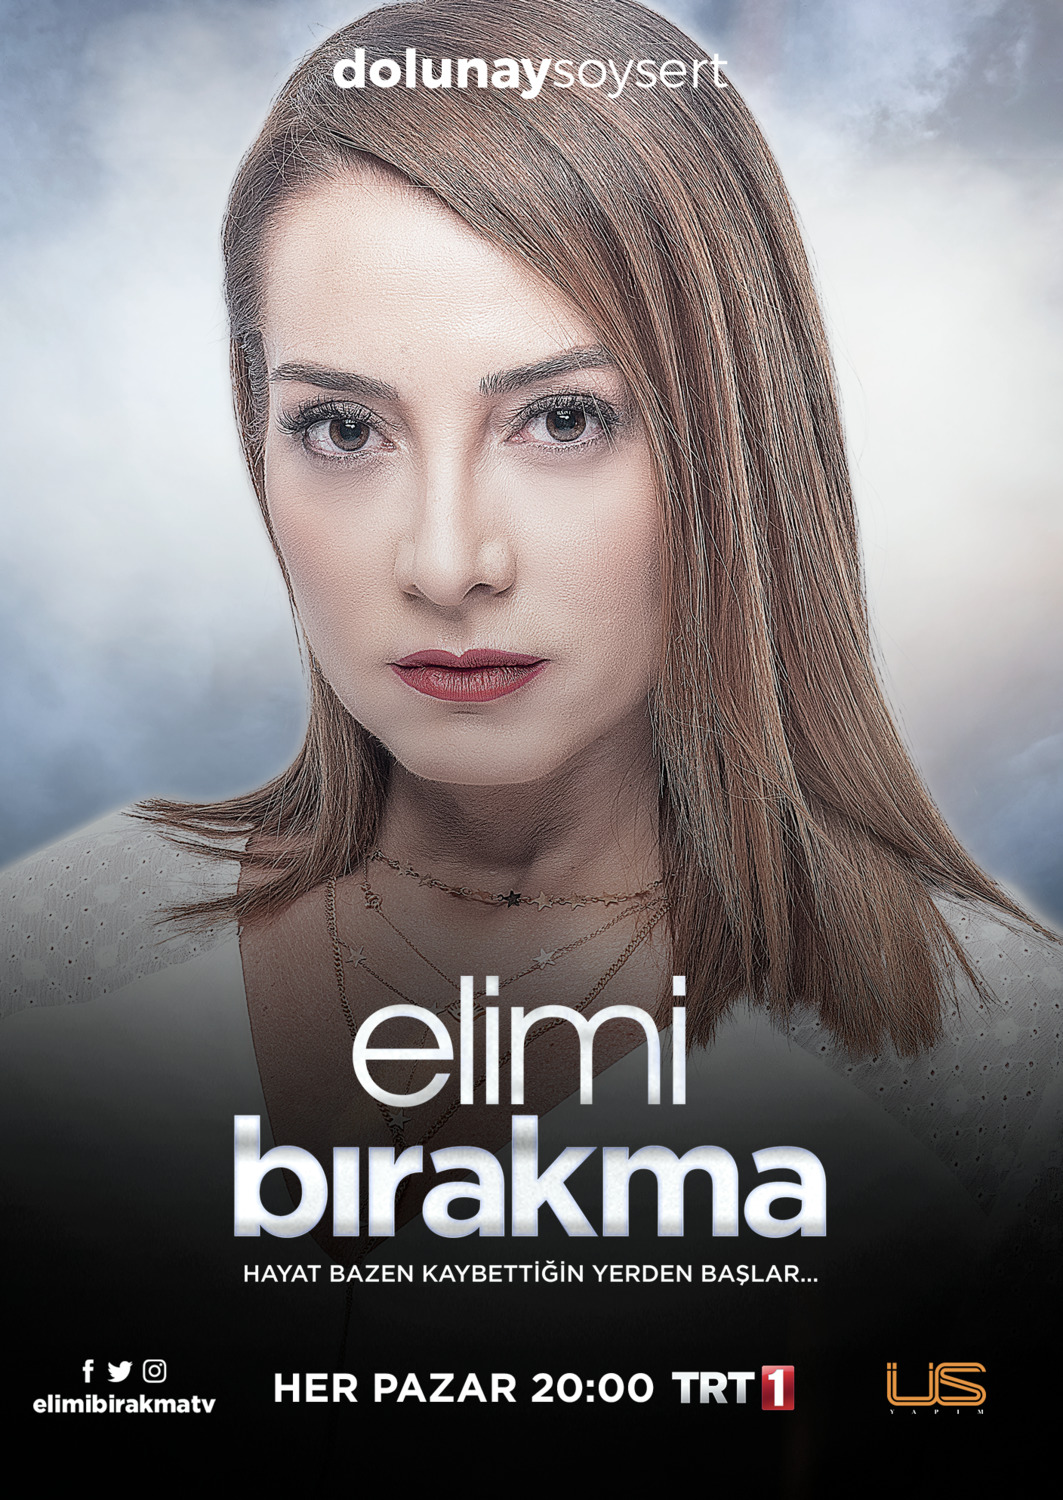 Extra Large TV Poster Image for Elimi birakma (#15 of 20)